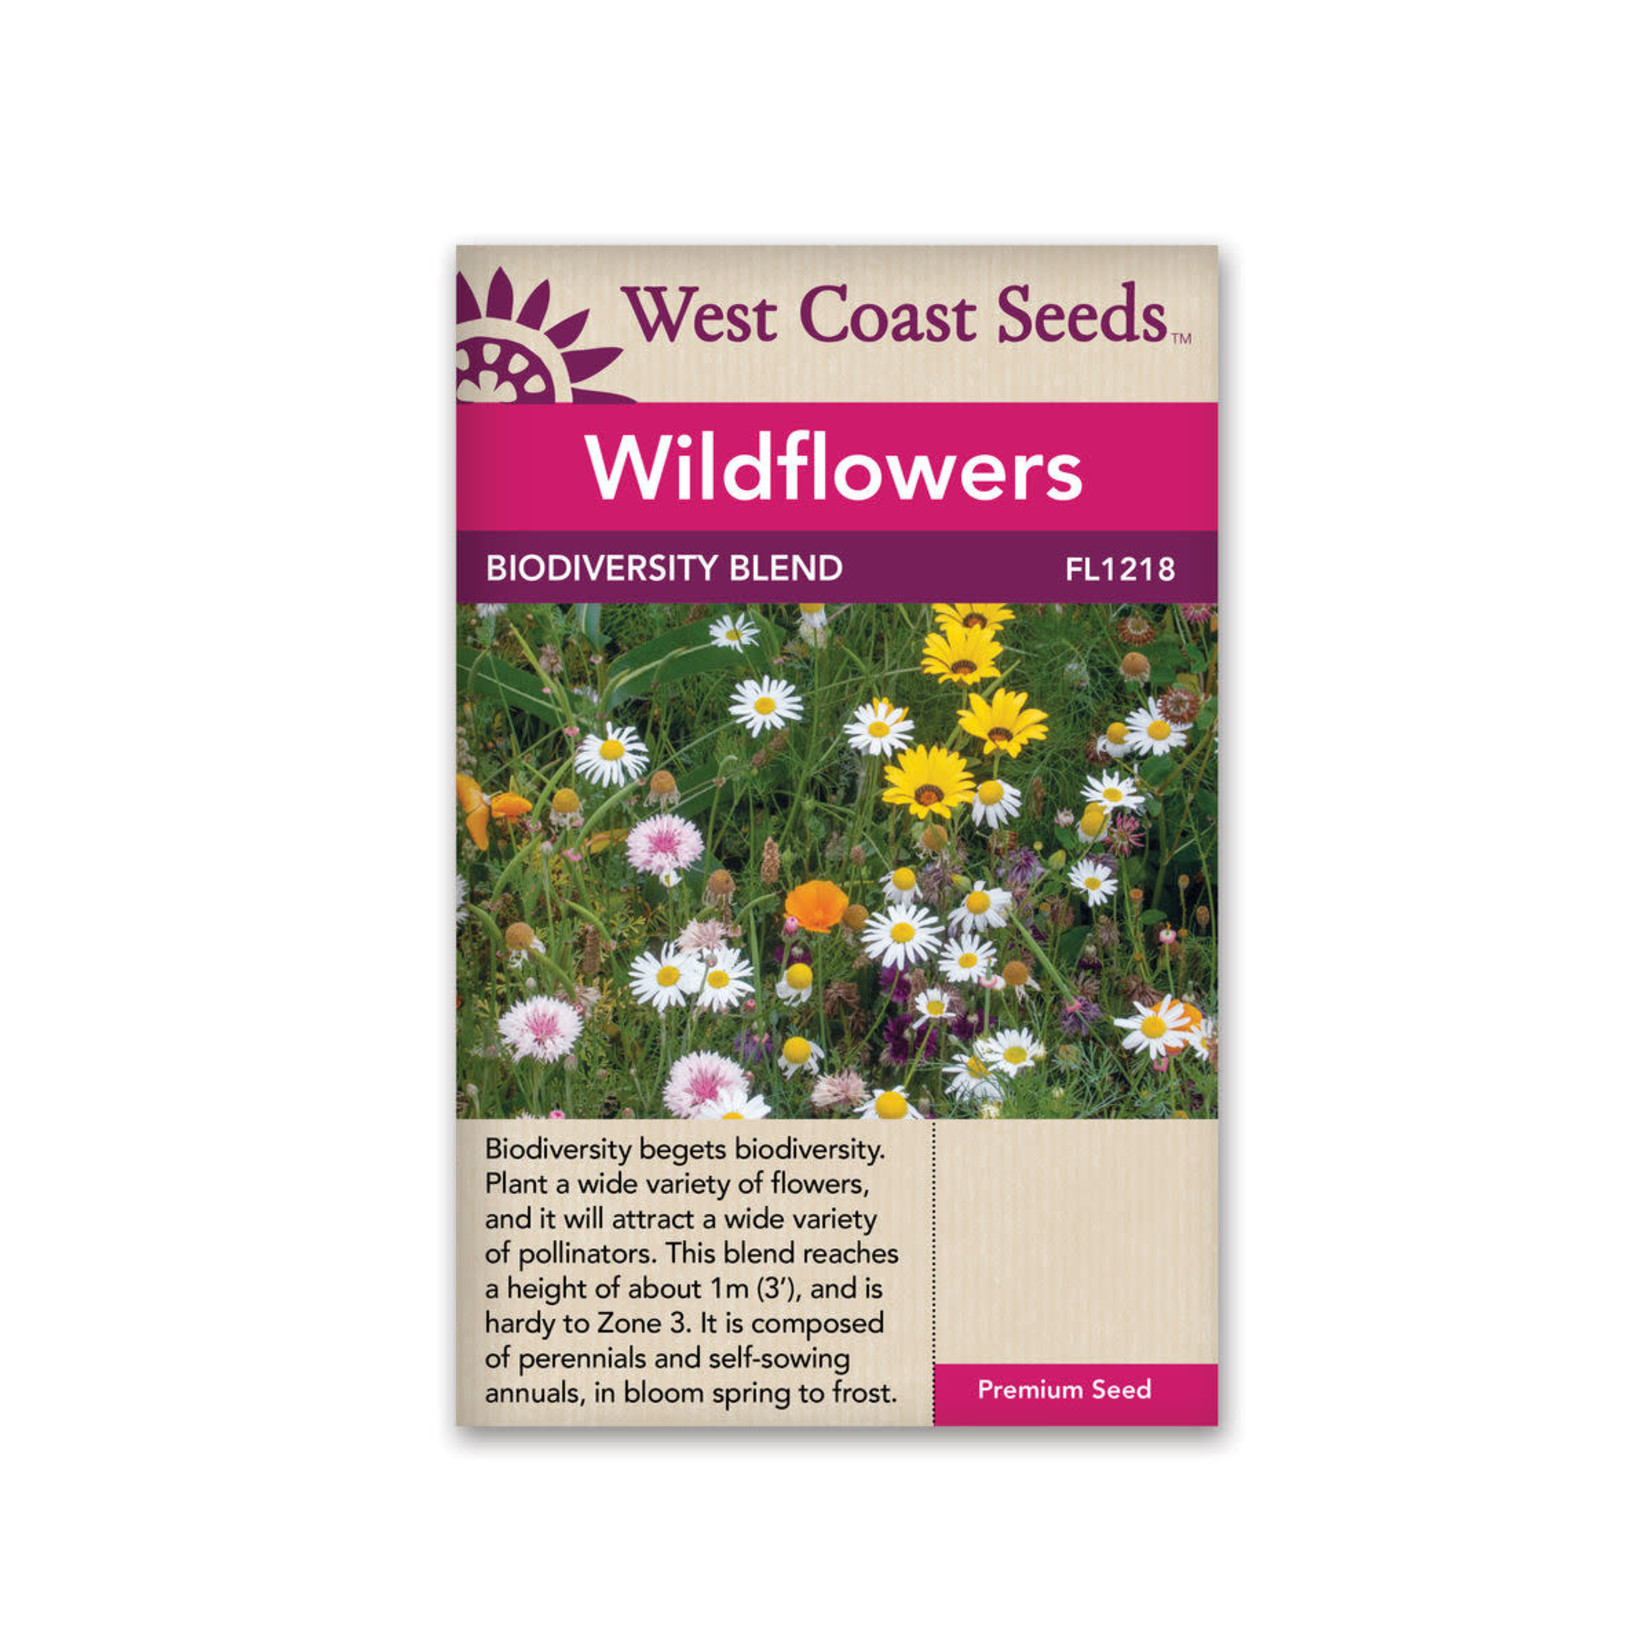 West Coast Seeds Wildflowers-Biodiversity Blend